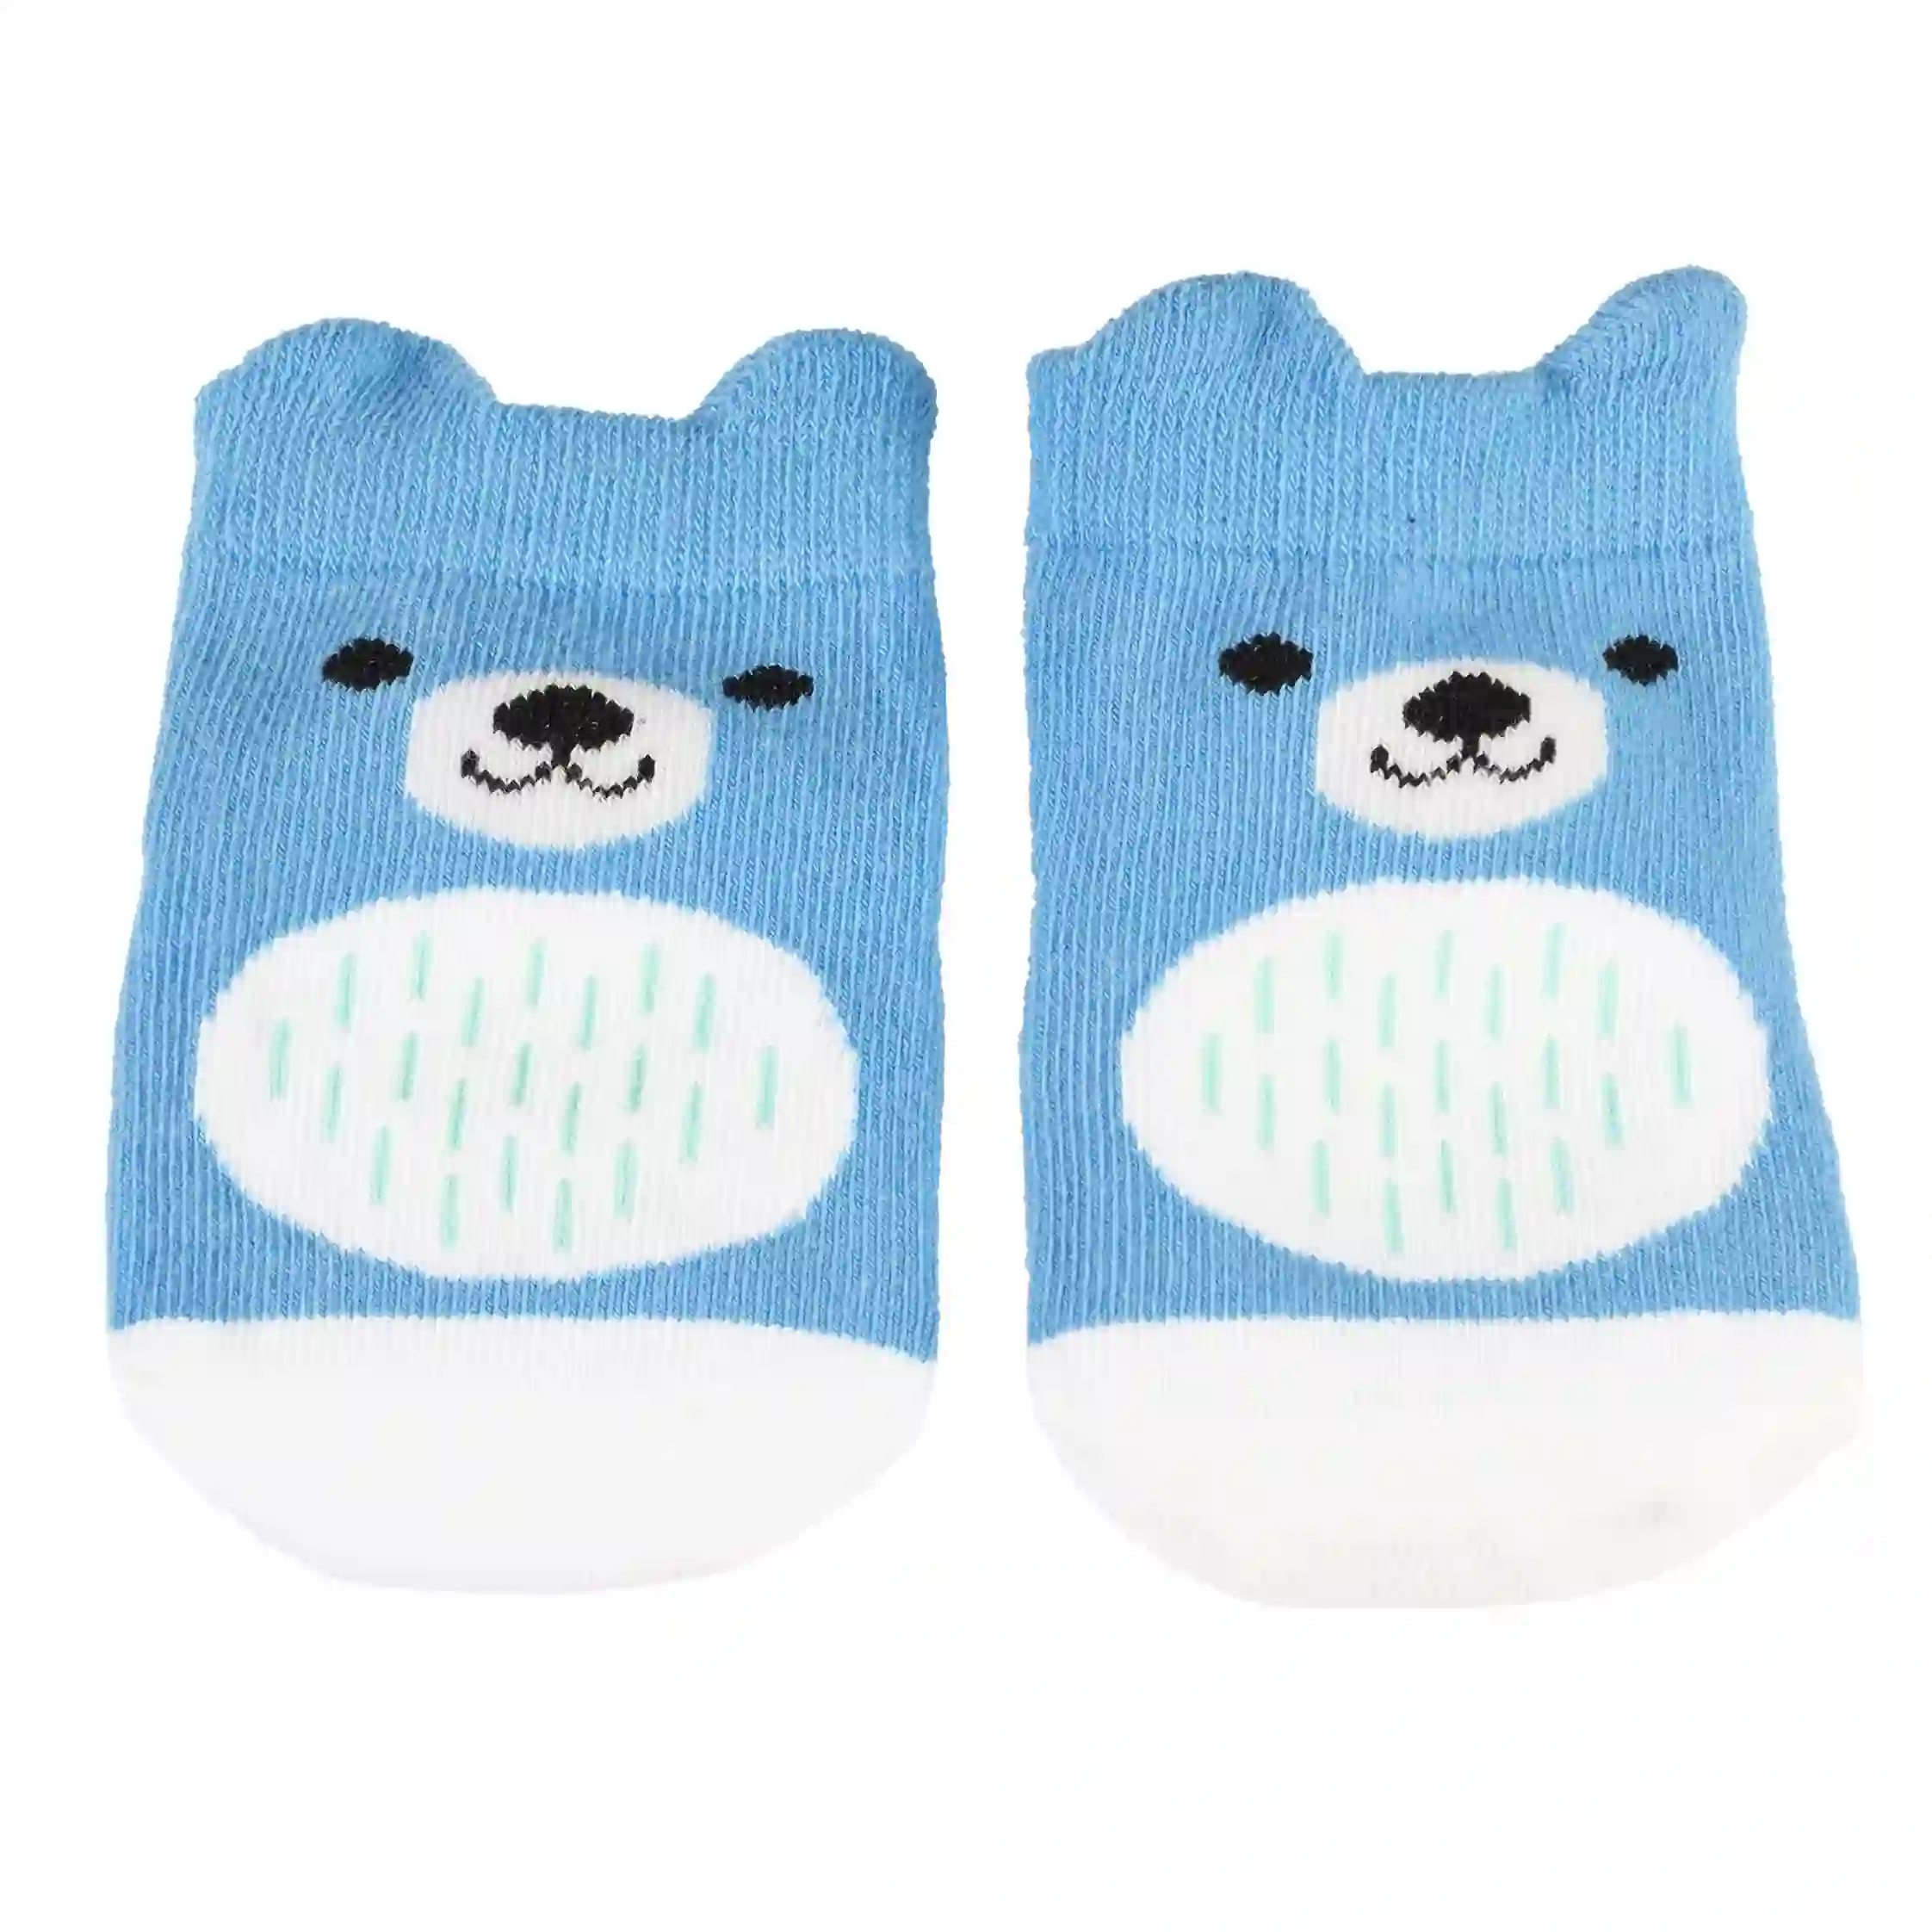 pair of baby socks - bruno the bear